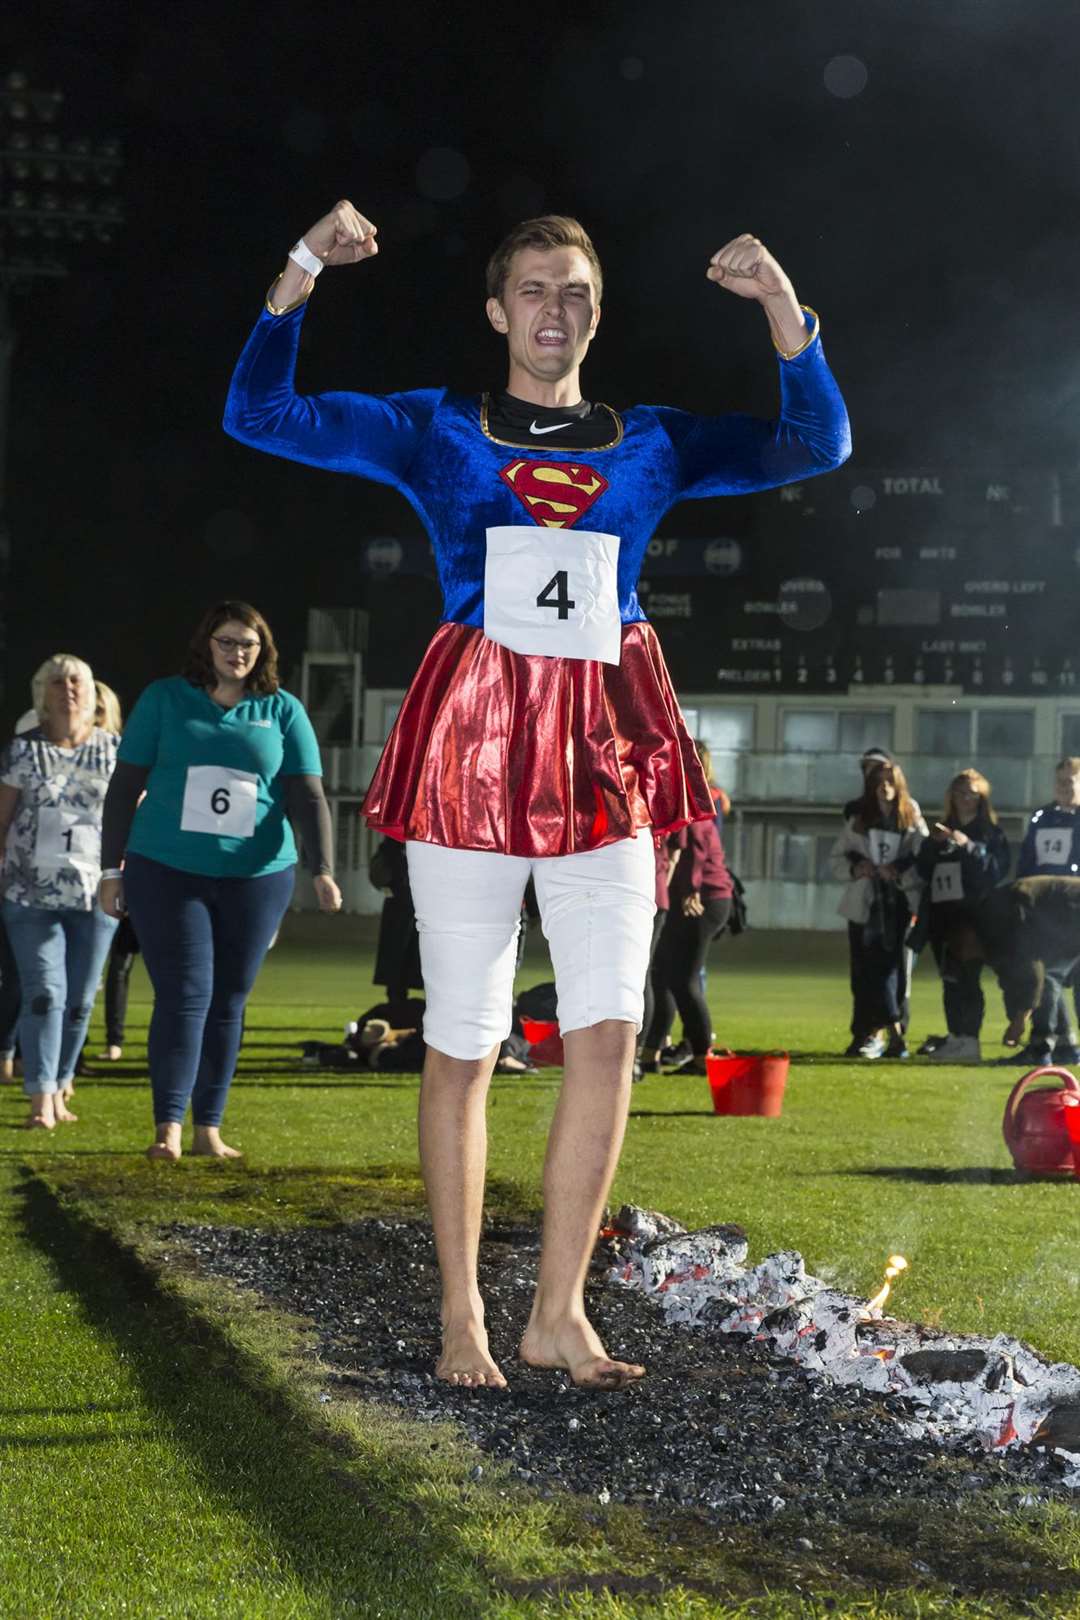 Ben Bogdan-Hodgson took part in a Wonderwoman costume (5228196)